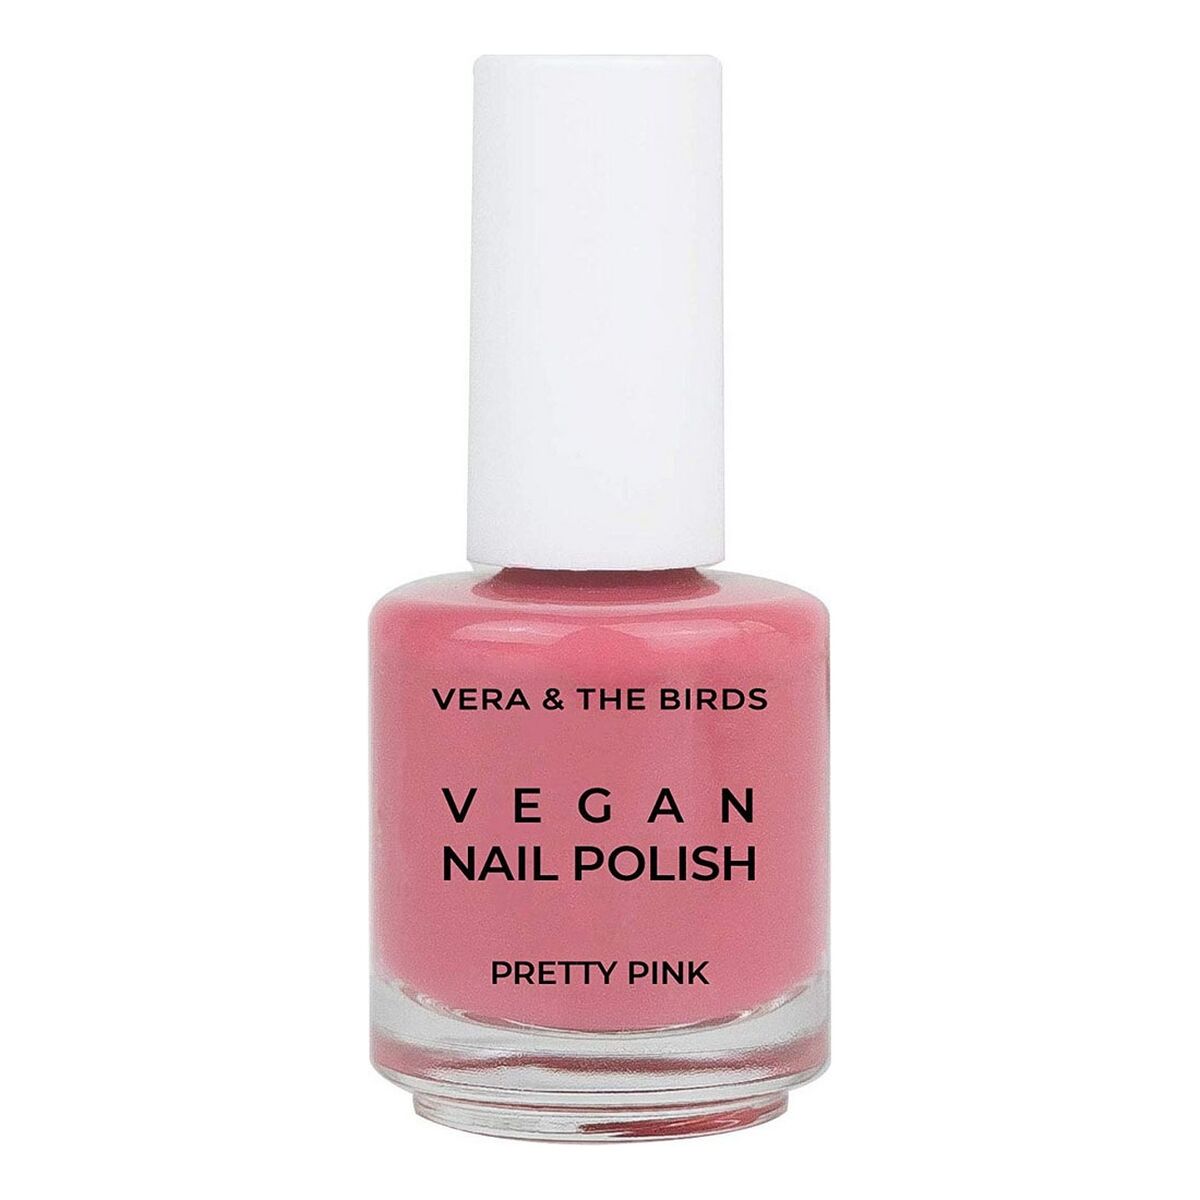 Nail polish Vegan Nail Polish Vera & The Birds Pretty Pink (14 ml) - Calm Beauty IE